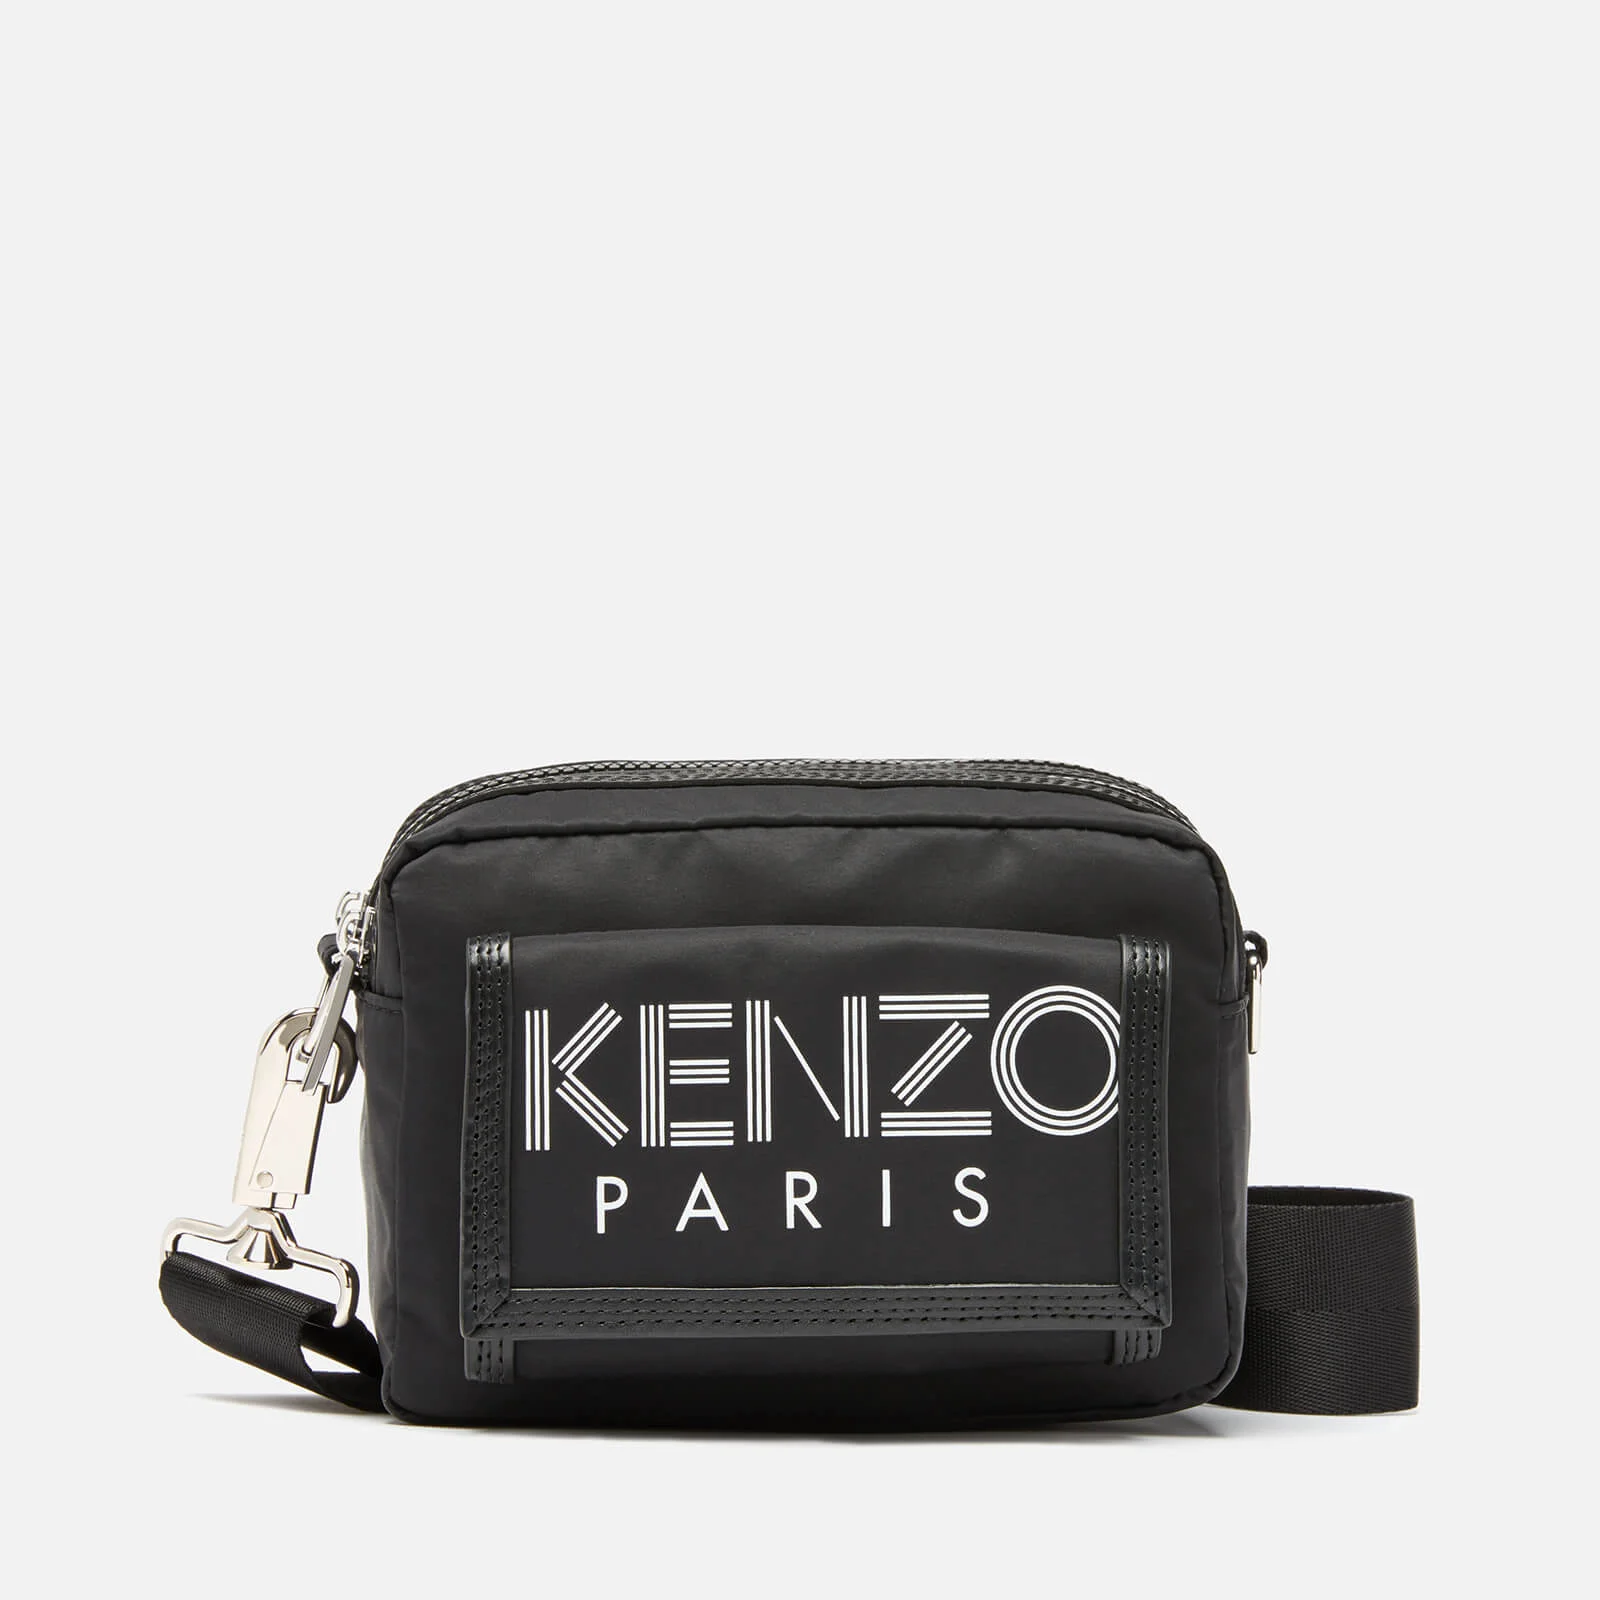 KENZO Men's Cross Body Bag - Black Image 1